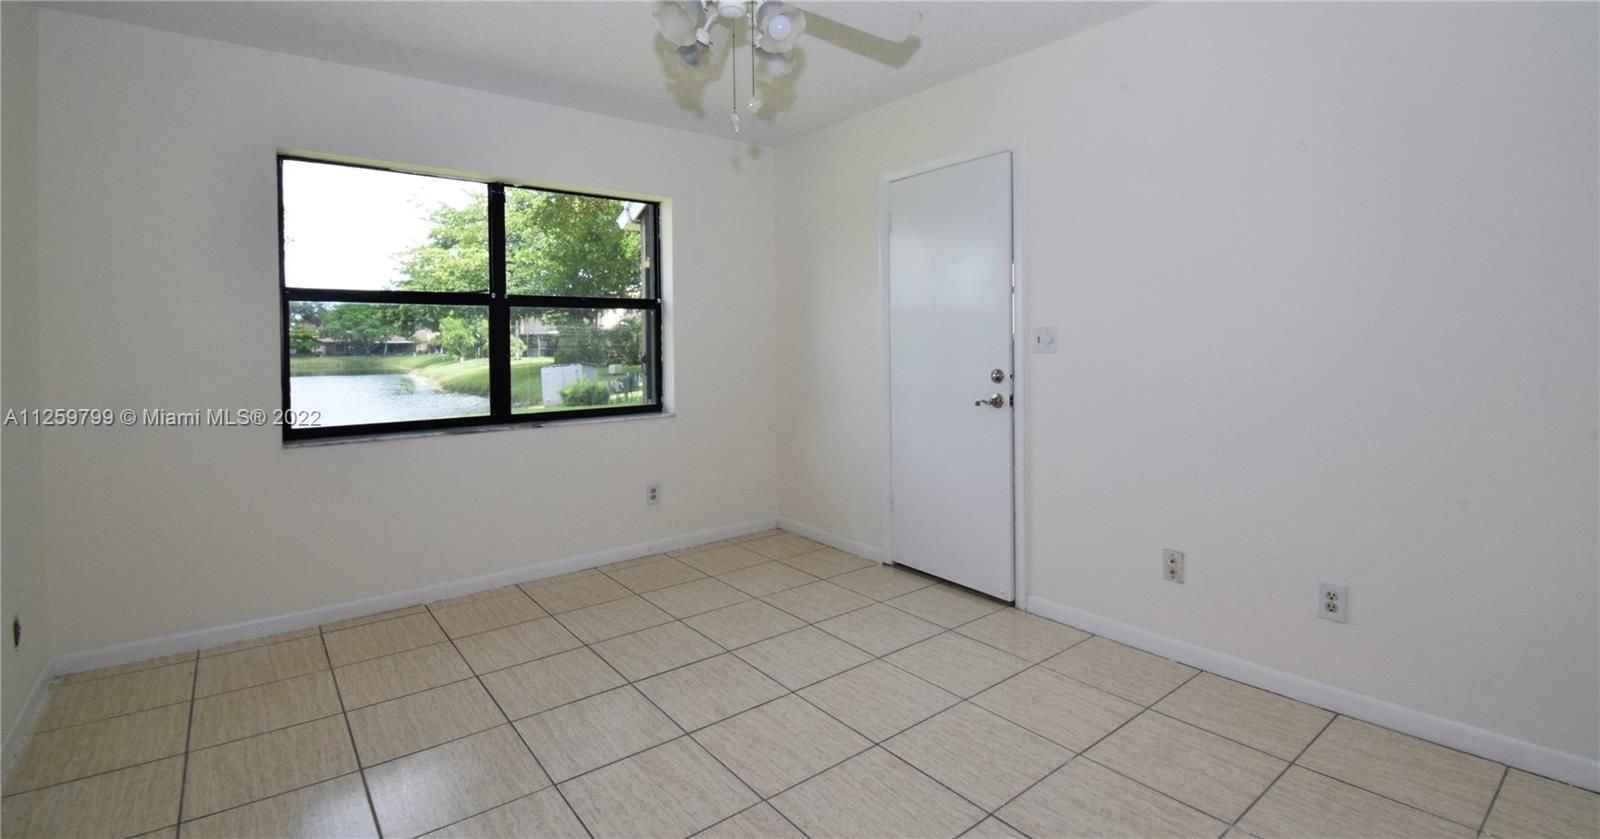 Real estate property located at 5407 Gate Lake Rd #5407, Broward County, Tamarac, FL